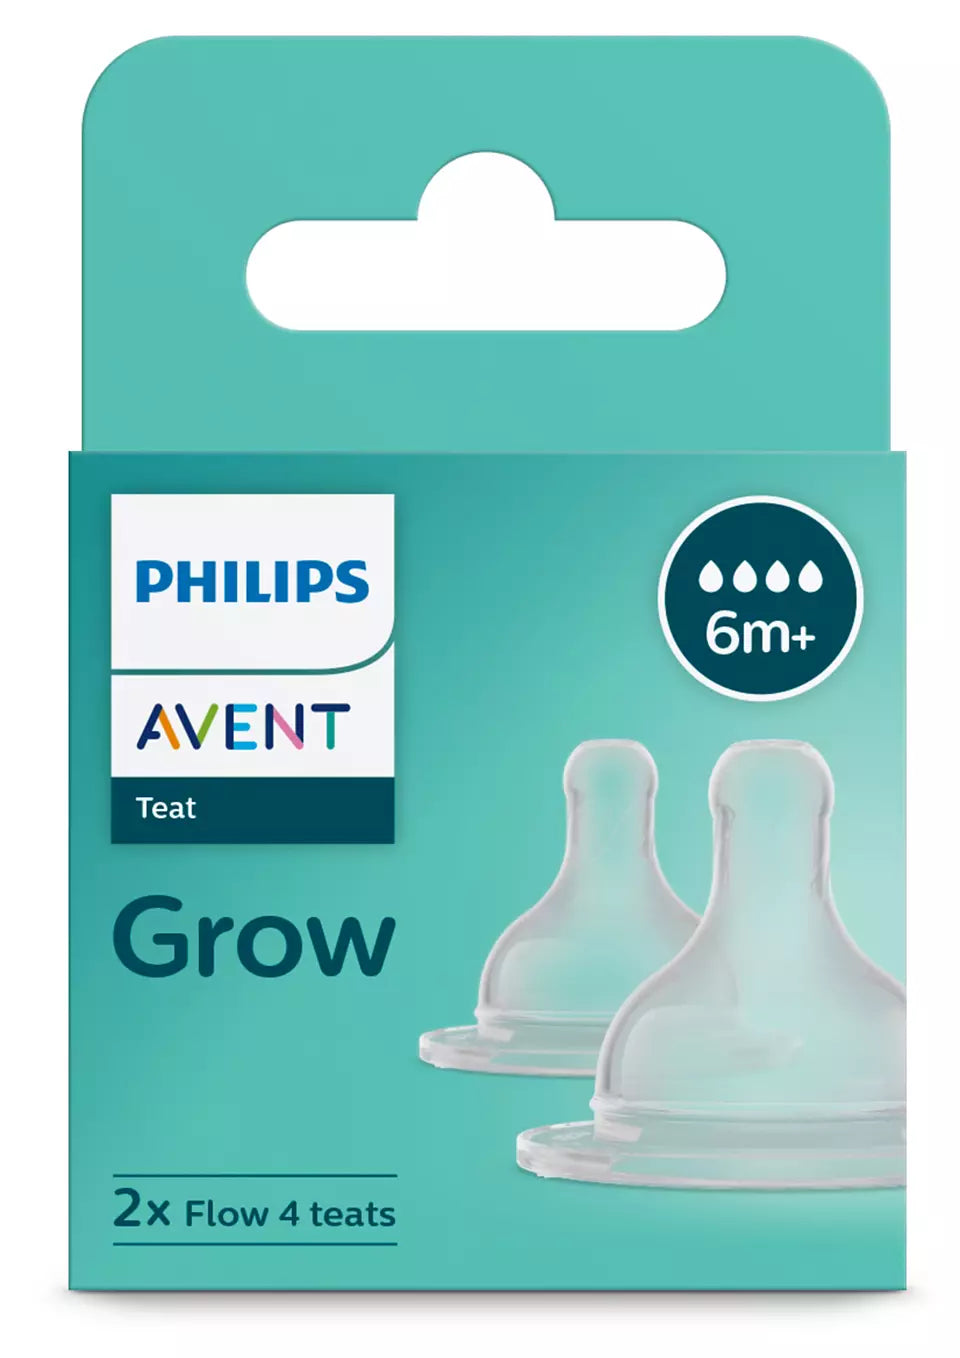 Buy Philips Avent Grow Baby Milk Feeding Bottle Teat Online in India at uyyaala.com